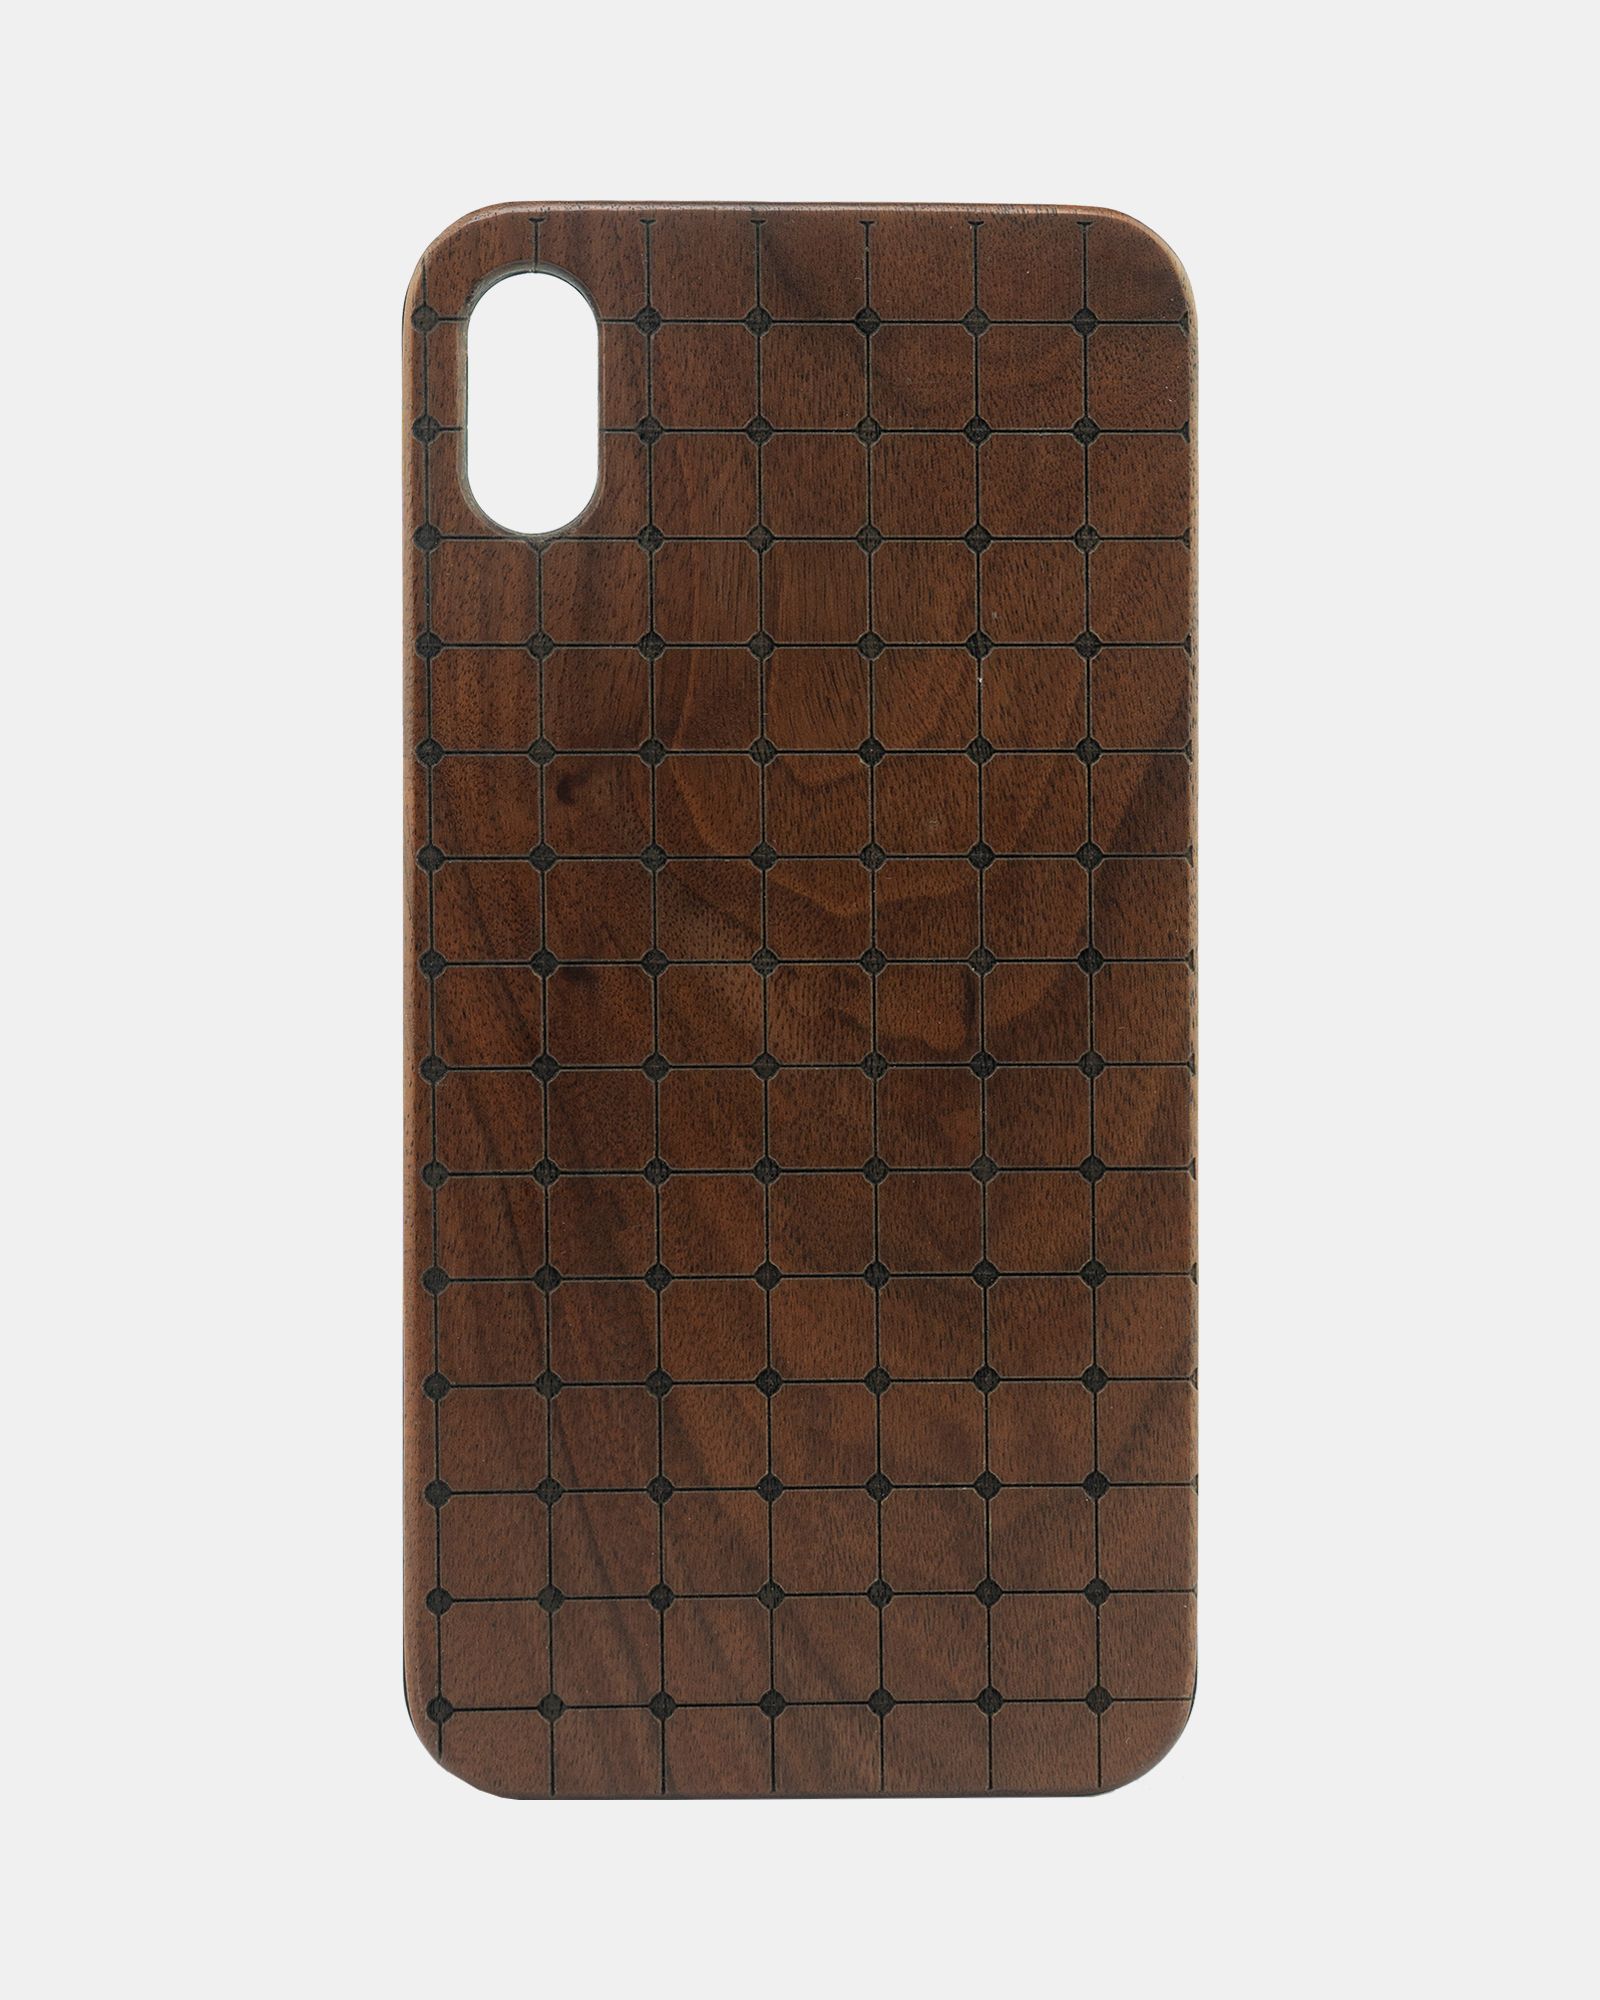  Hard Plastic Wooden Iphone X Case 